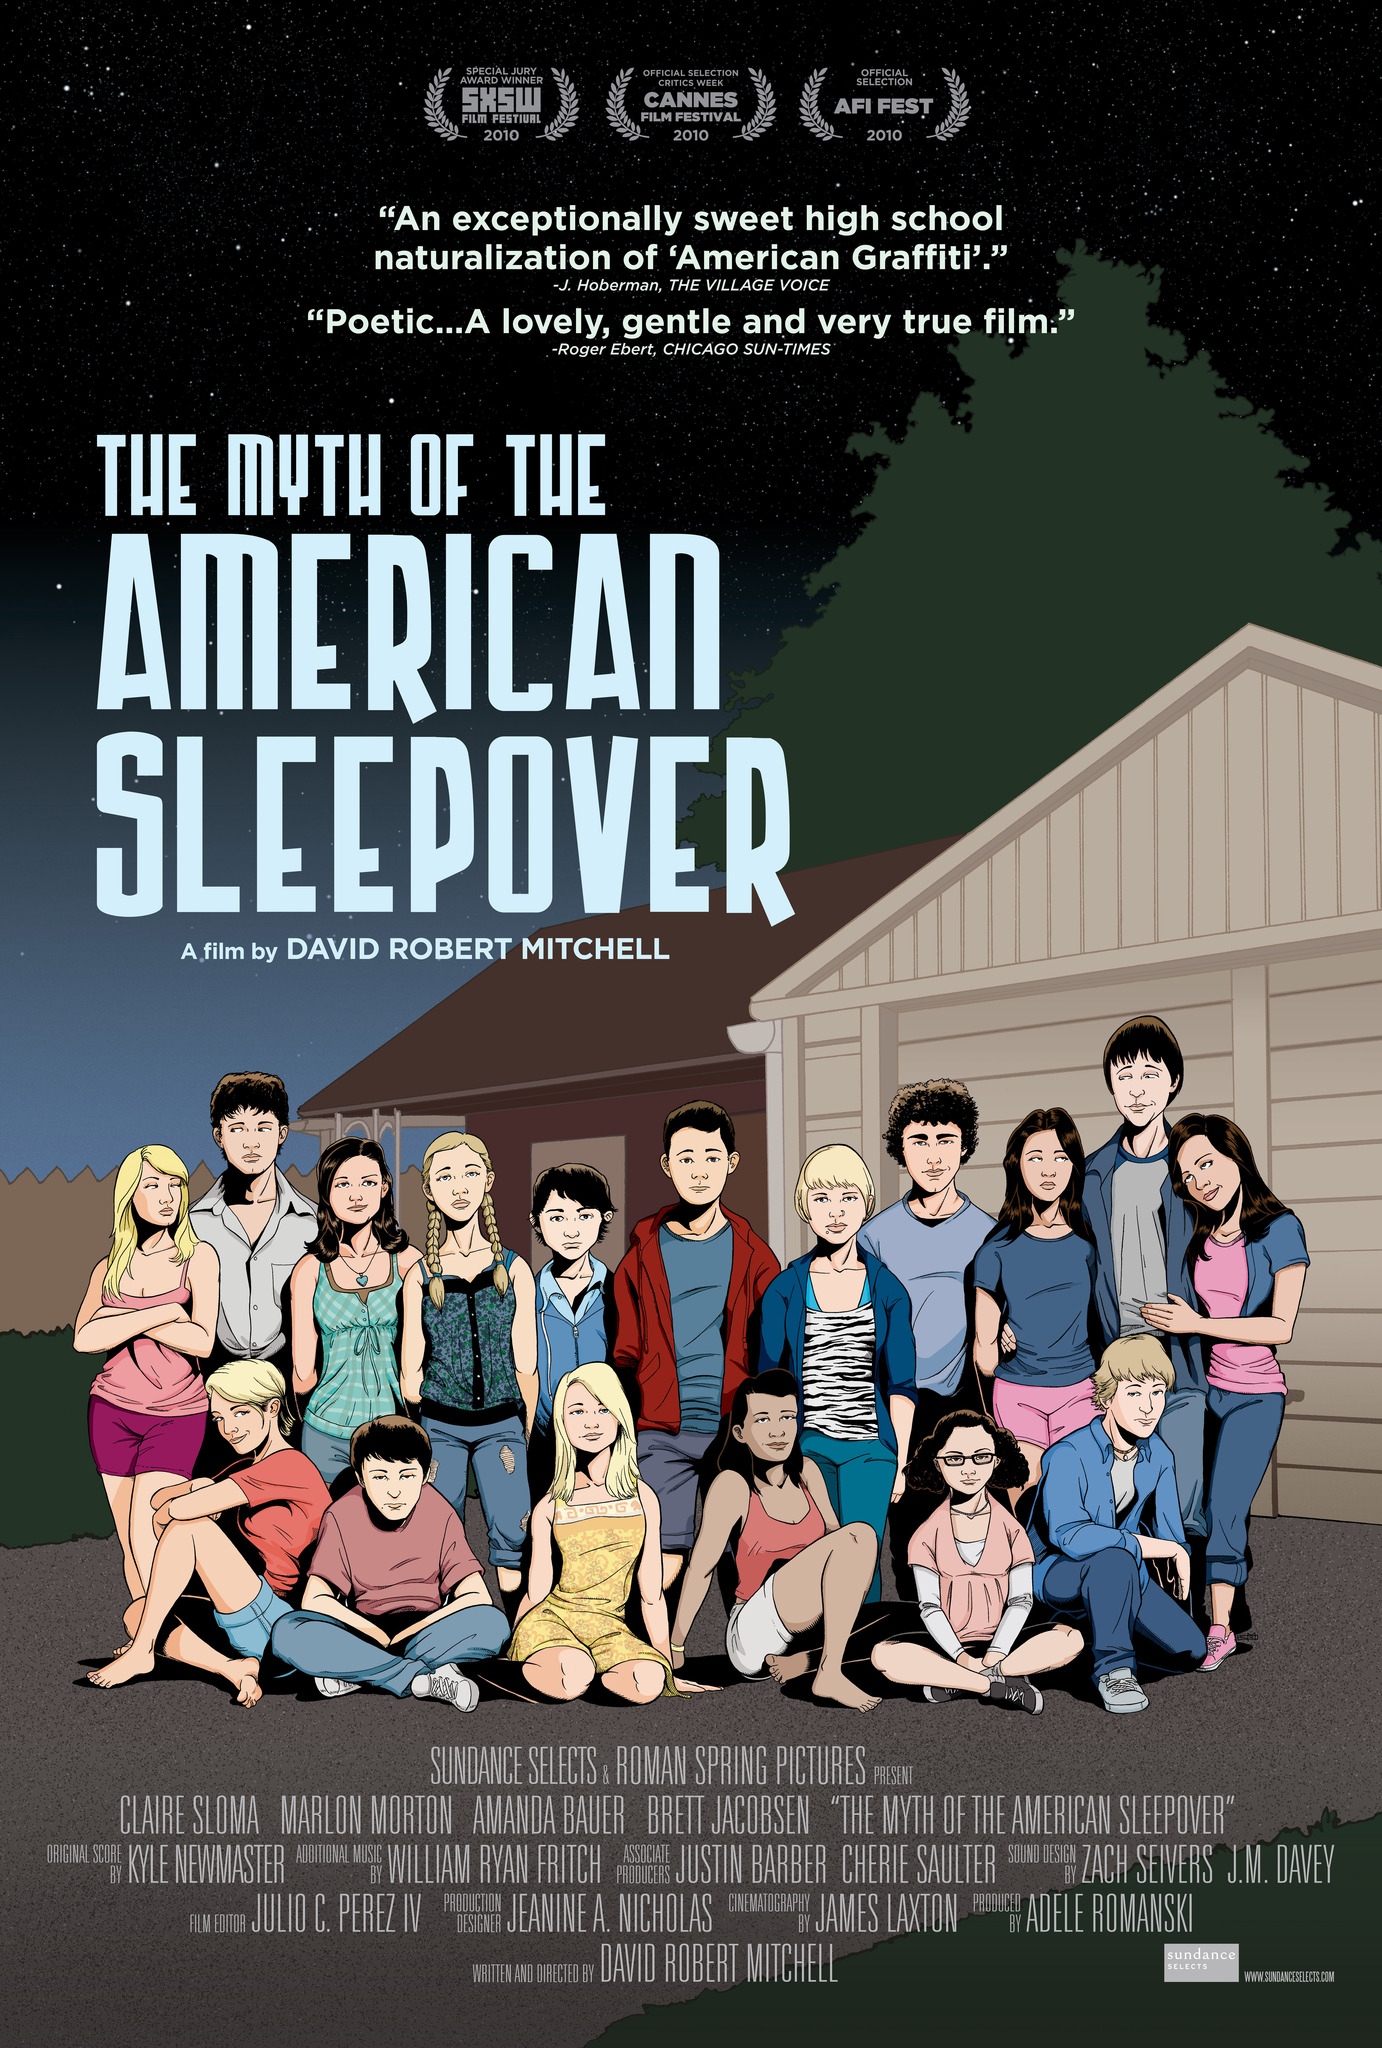 Nonton film The Myth of the American Sleepover layarkaca21 indoxx1 ganool online streaming terbaru